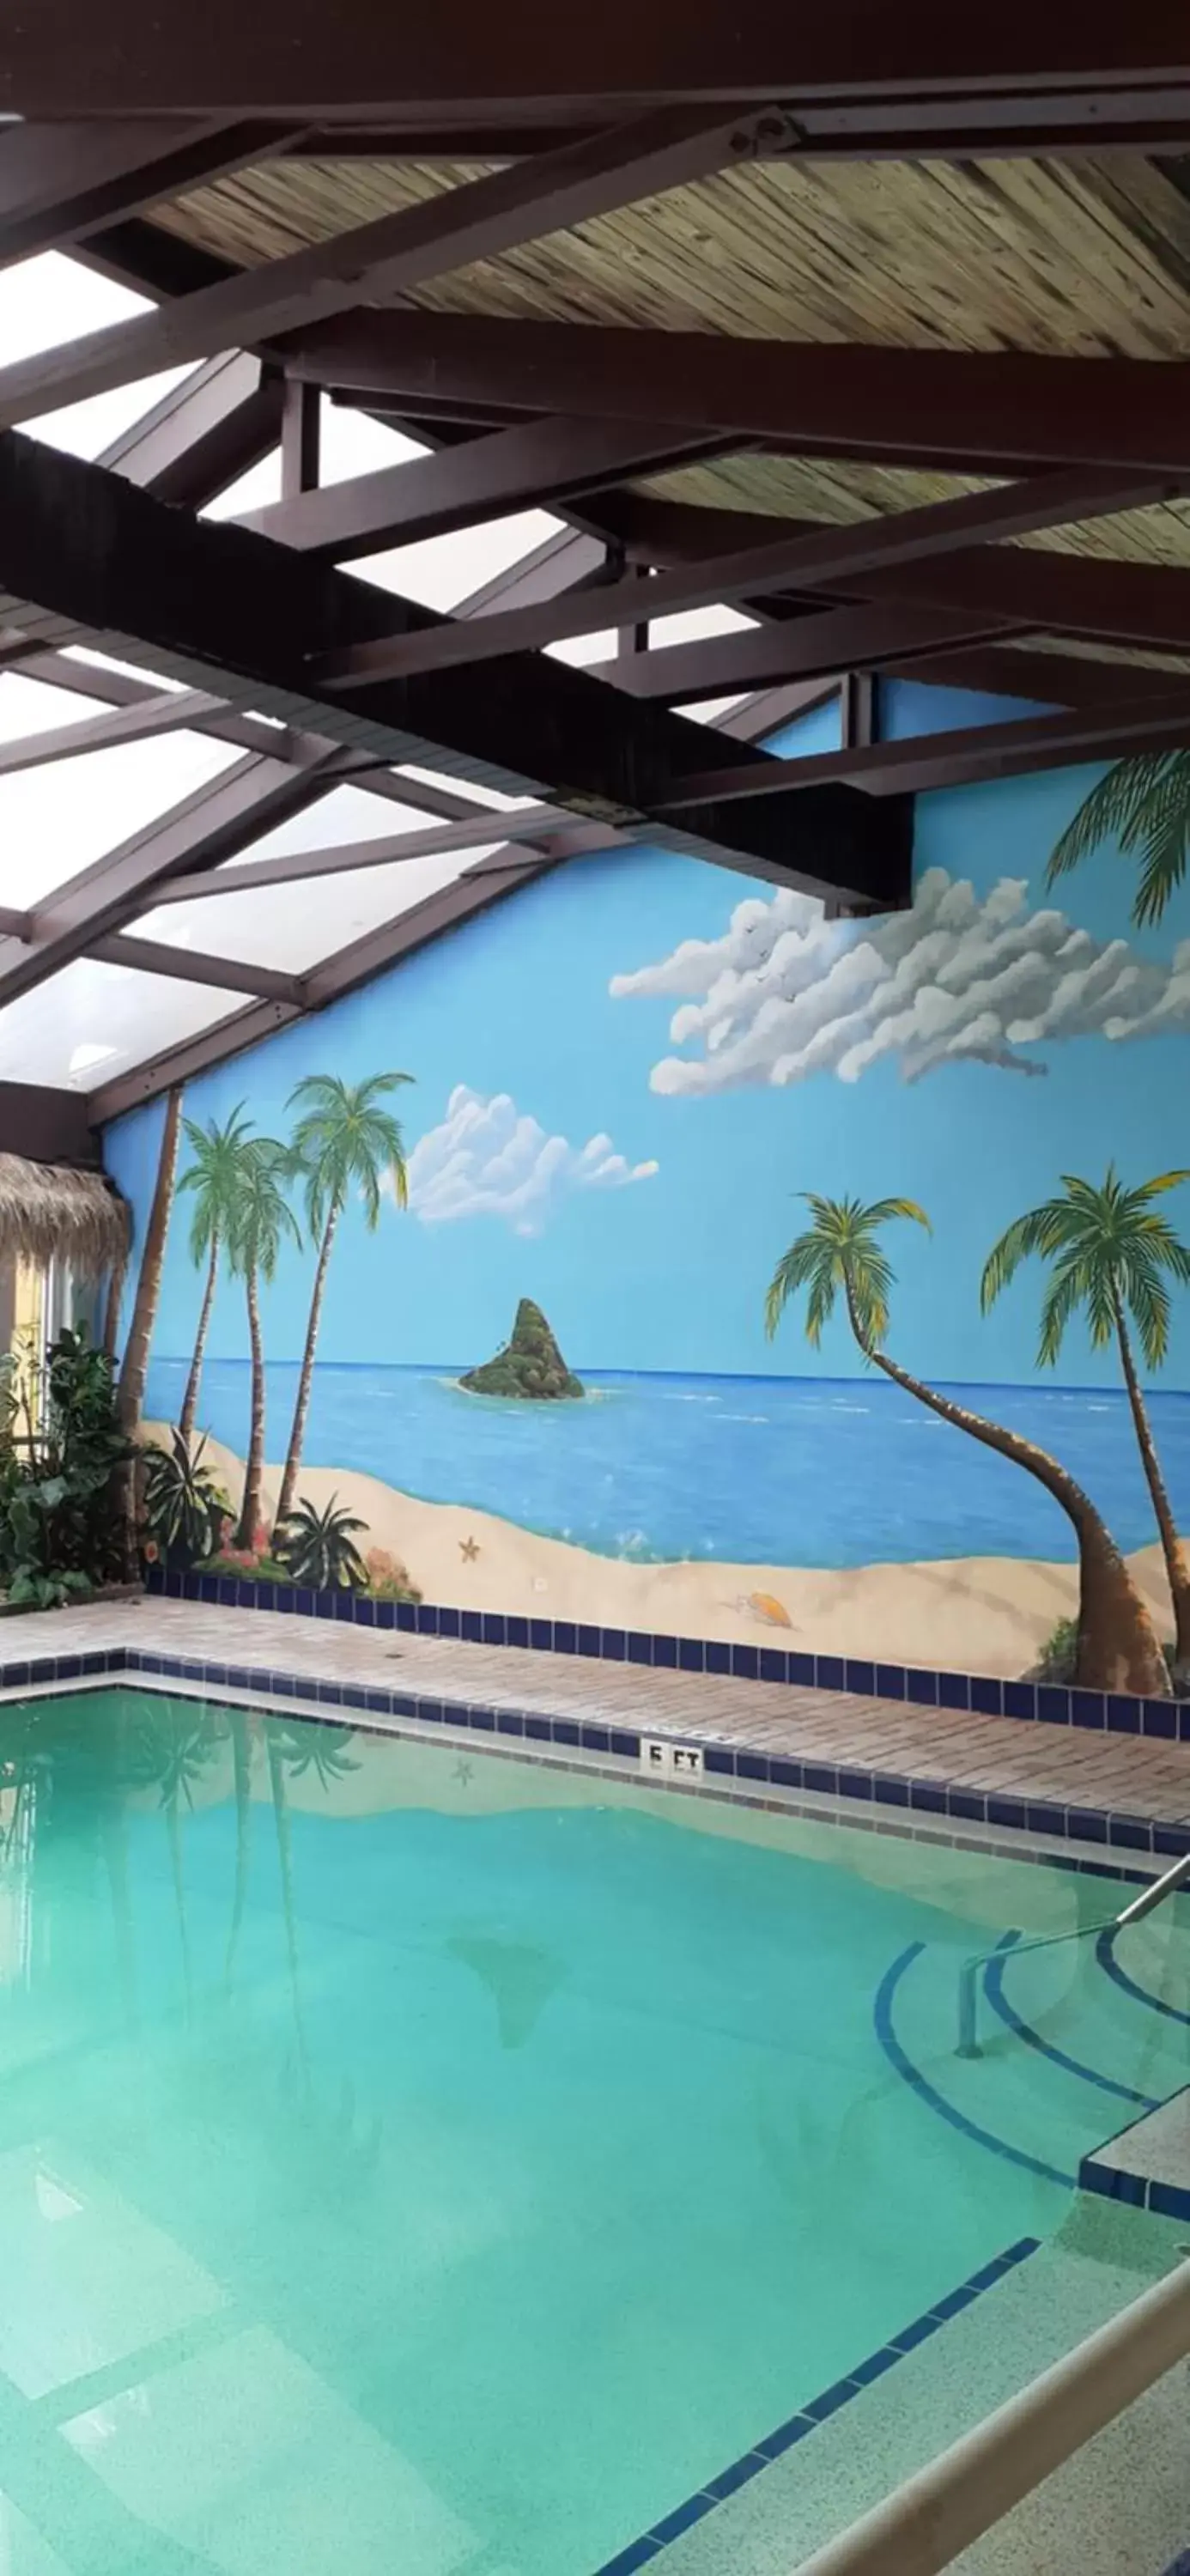 Swimming Pool in Daytona Beach Hawaiian Inn